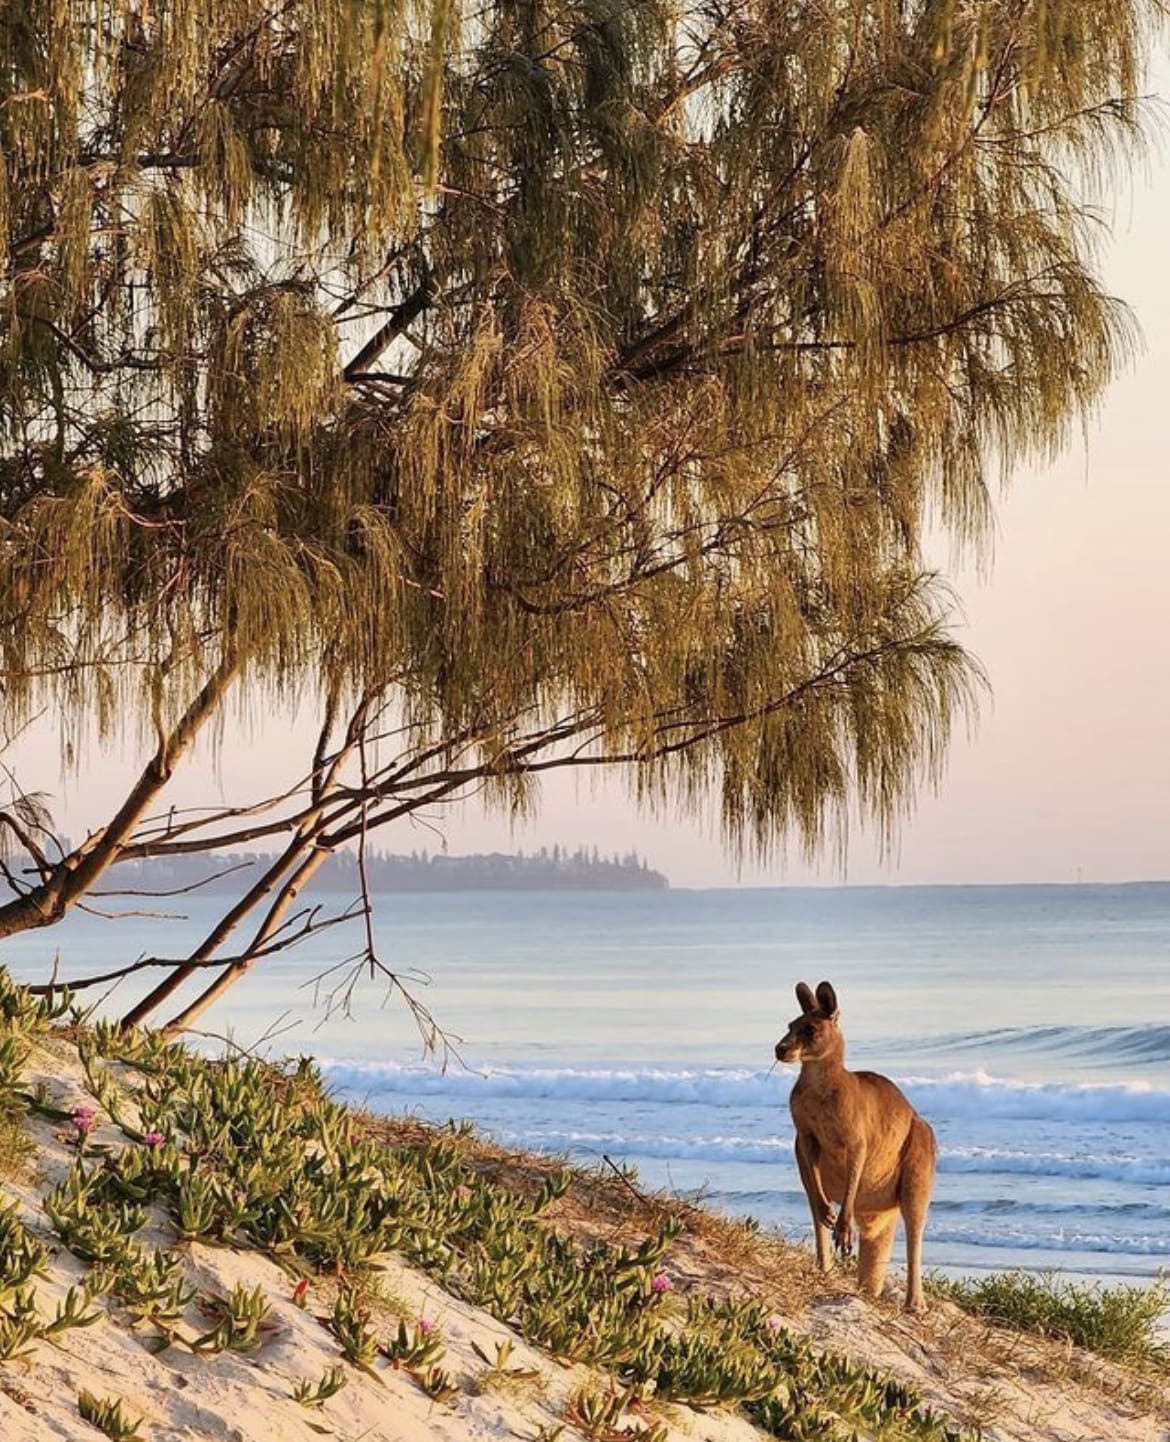 Kangaroo grazing along the beach on Bribe Island